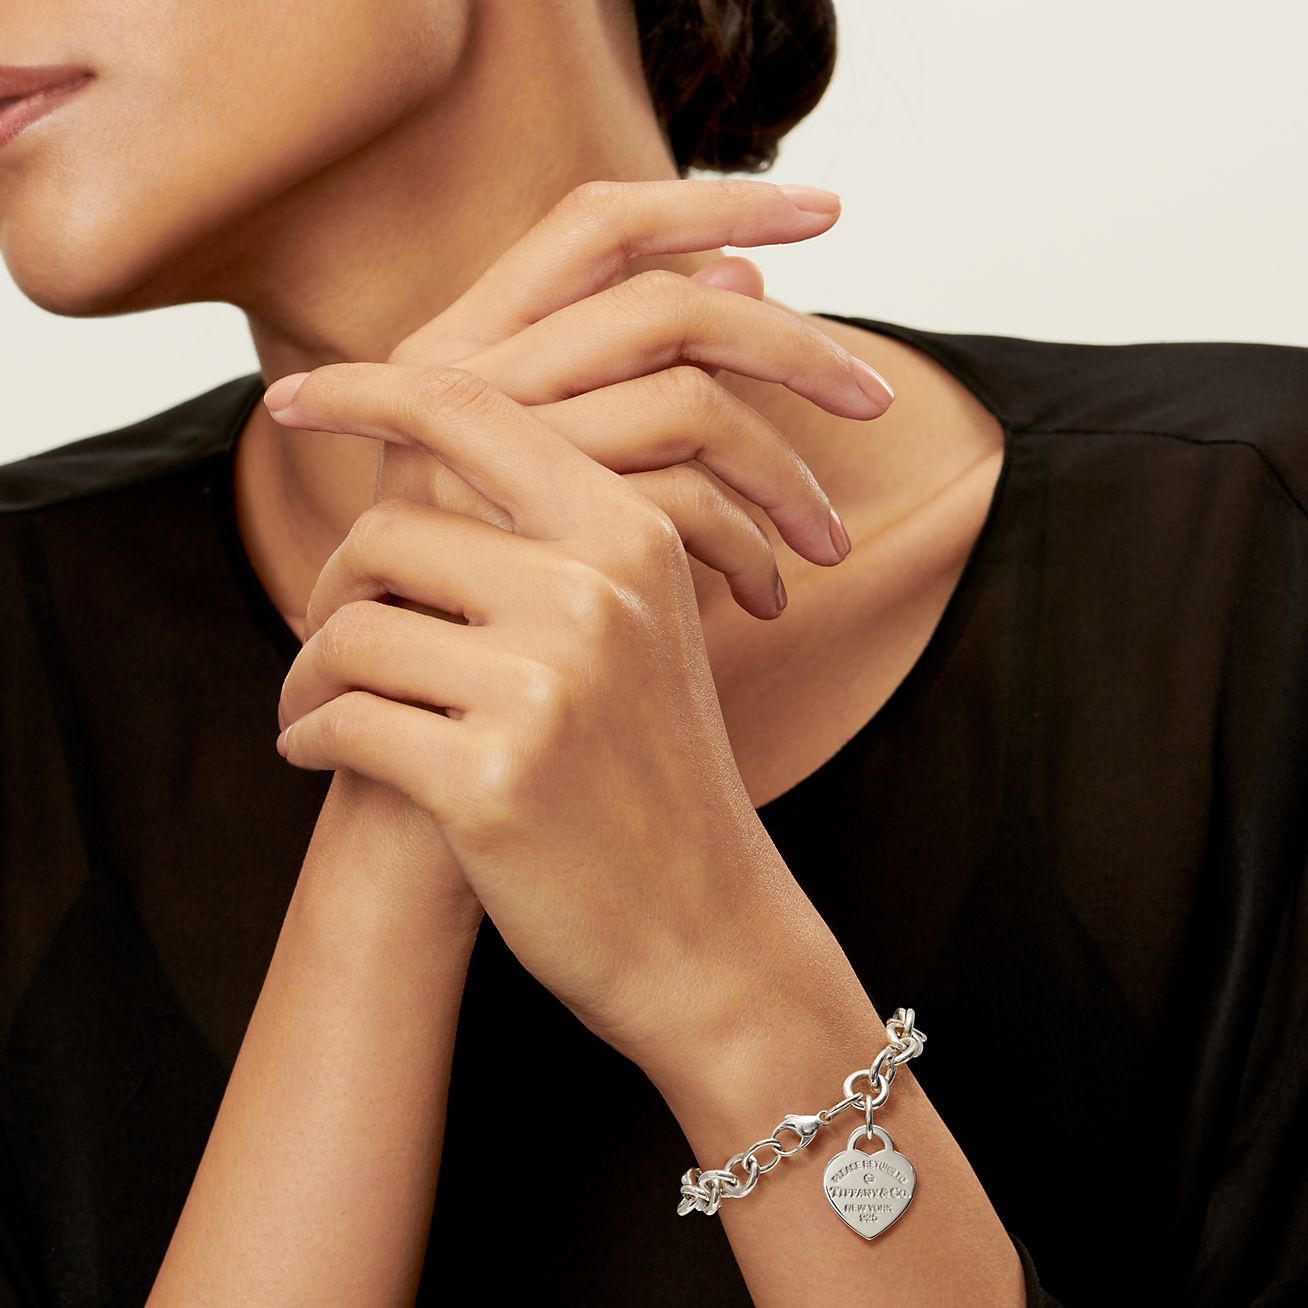 Return to Tiffany Lovestruck Heart Tag Bracelet in Silver, Medium, Size: Extra Small